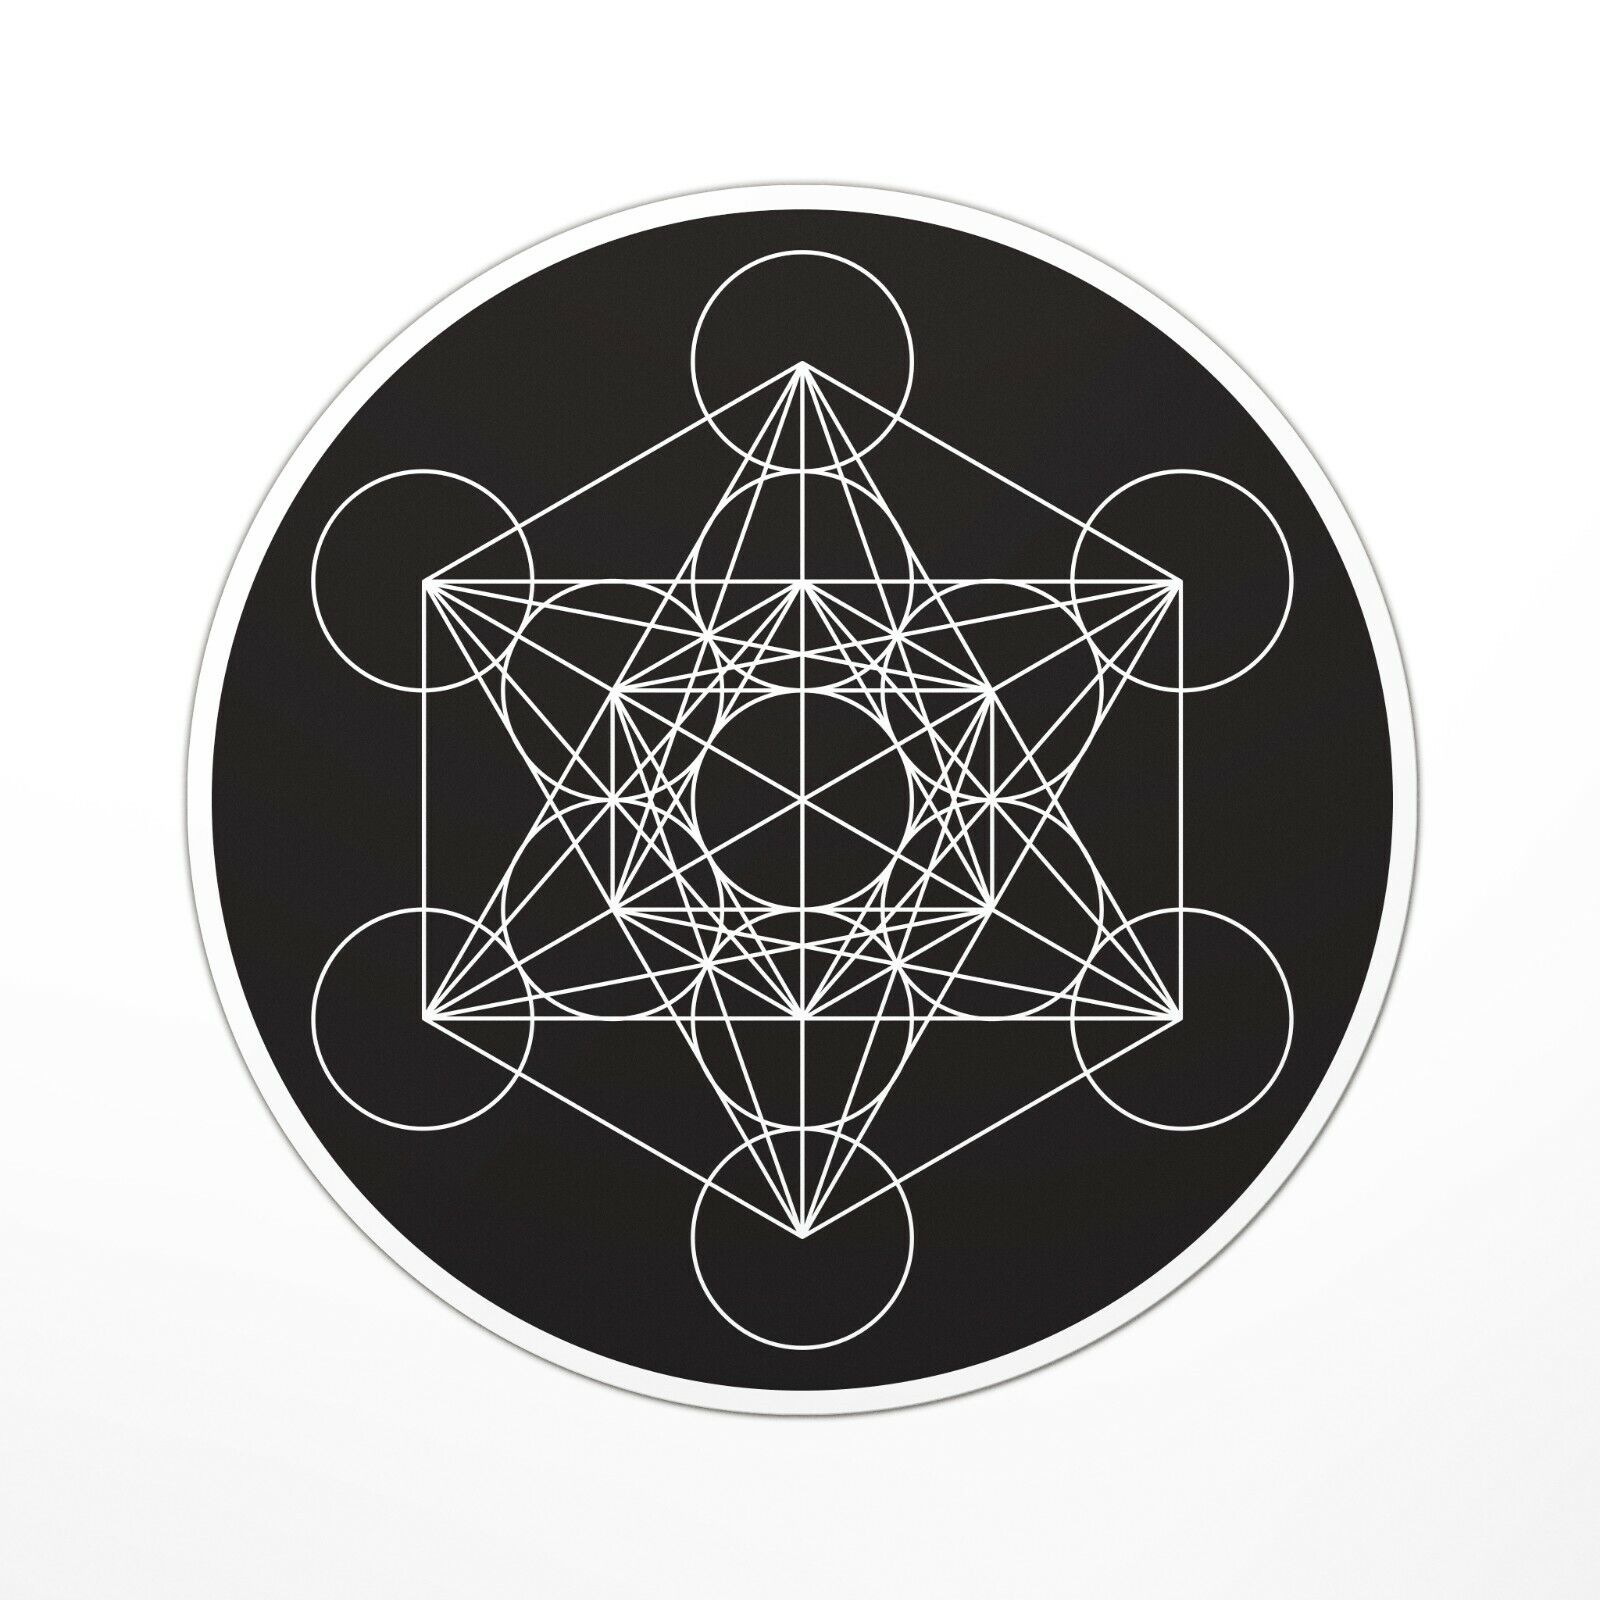 (076item#) Metatron's Cube Sticker (Sacred Geometry, Zen) (4 sizes)